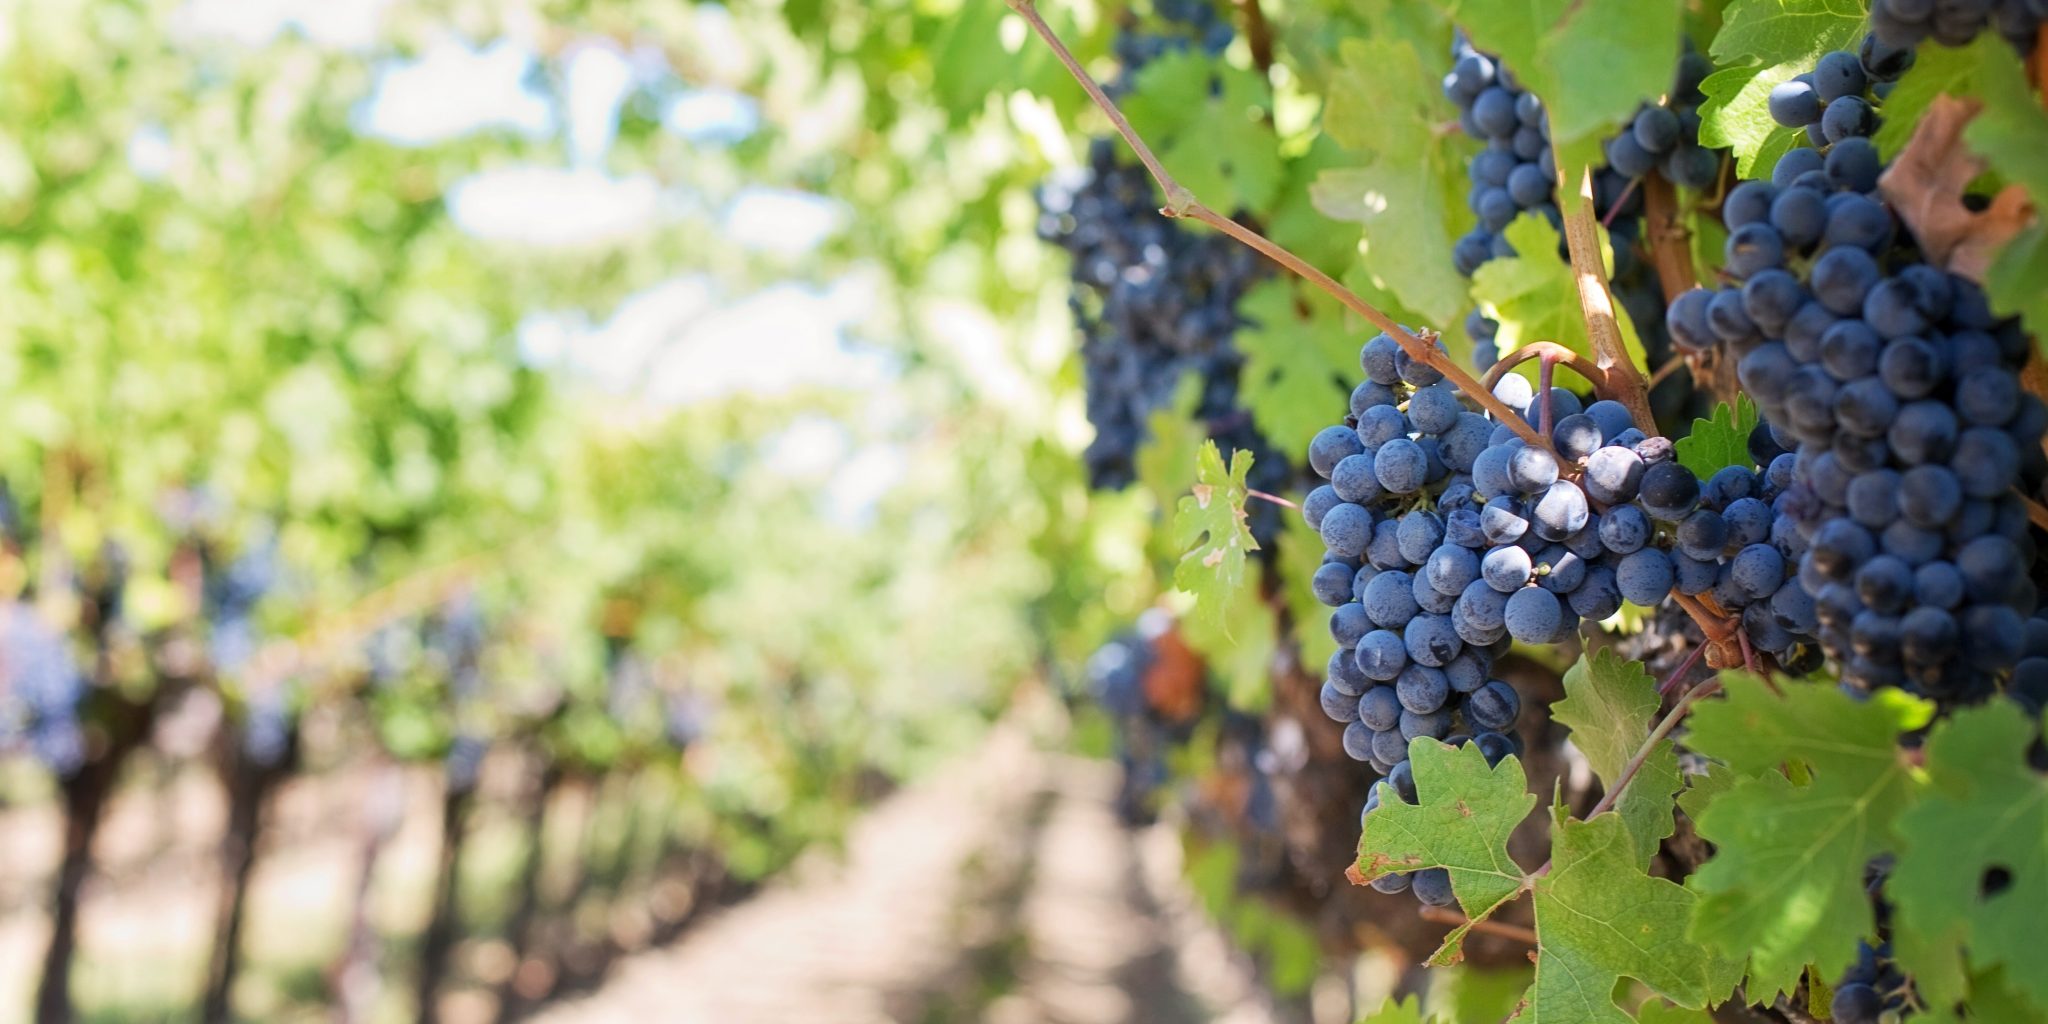 vid vino parra uva vino ruta del vino caldo bordoles cobre foliar plaga insecticida herbicida equipo